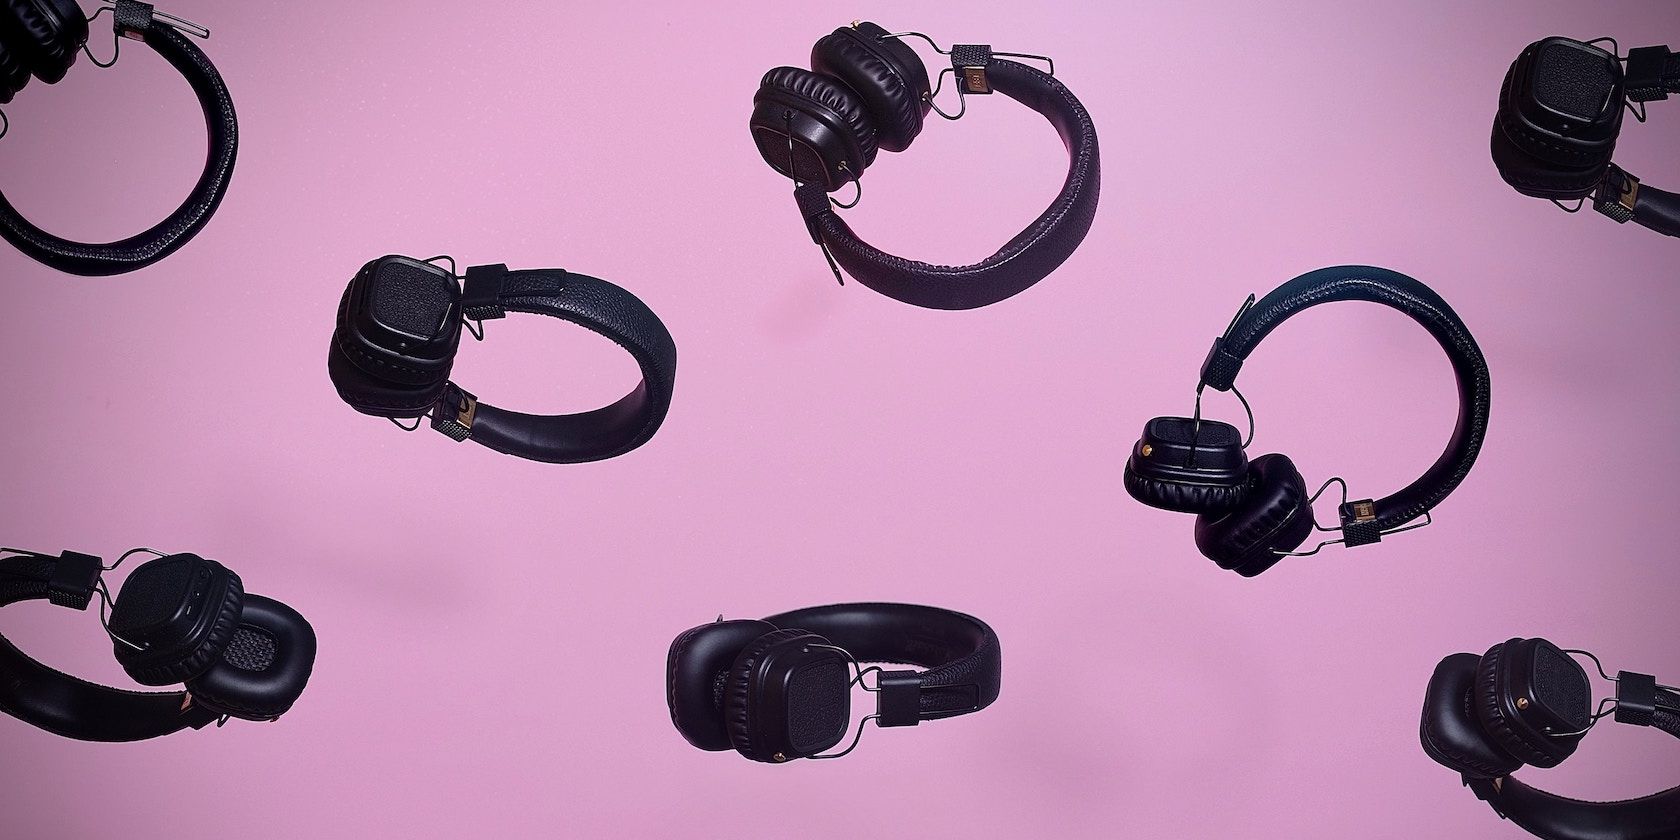 Repeating image of black headphones laid on a purple backgroud